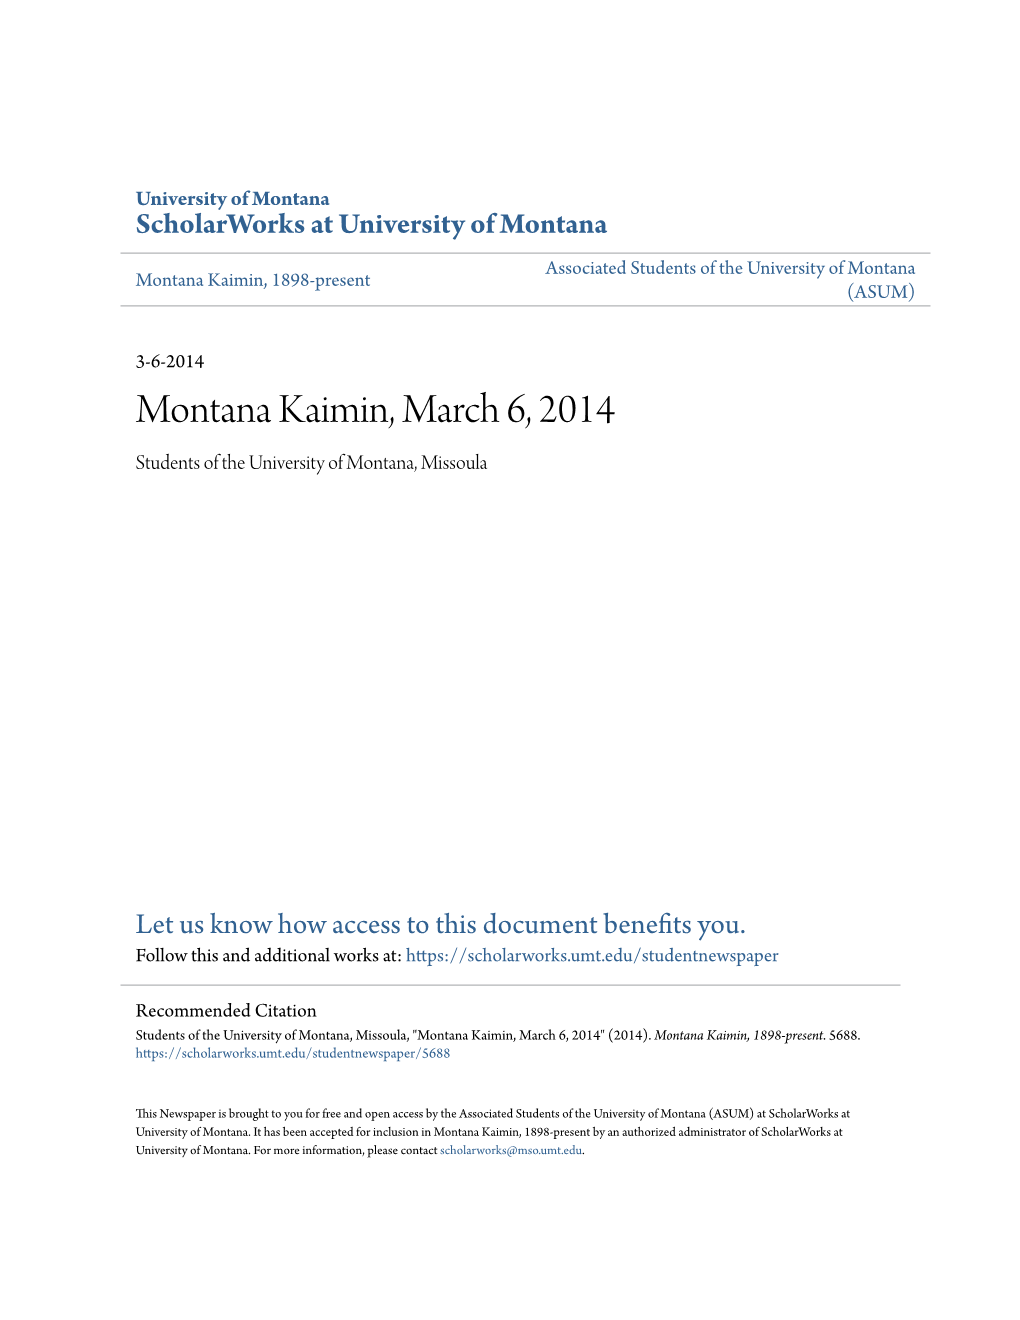 Montana Kaimin, March 6, 2014 Students of the University of Montana, Missoula